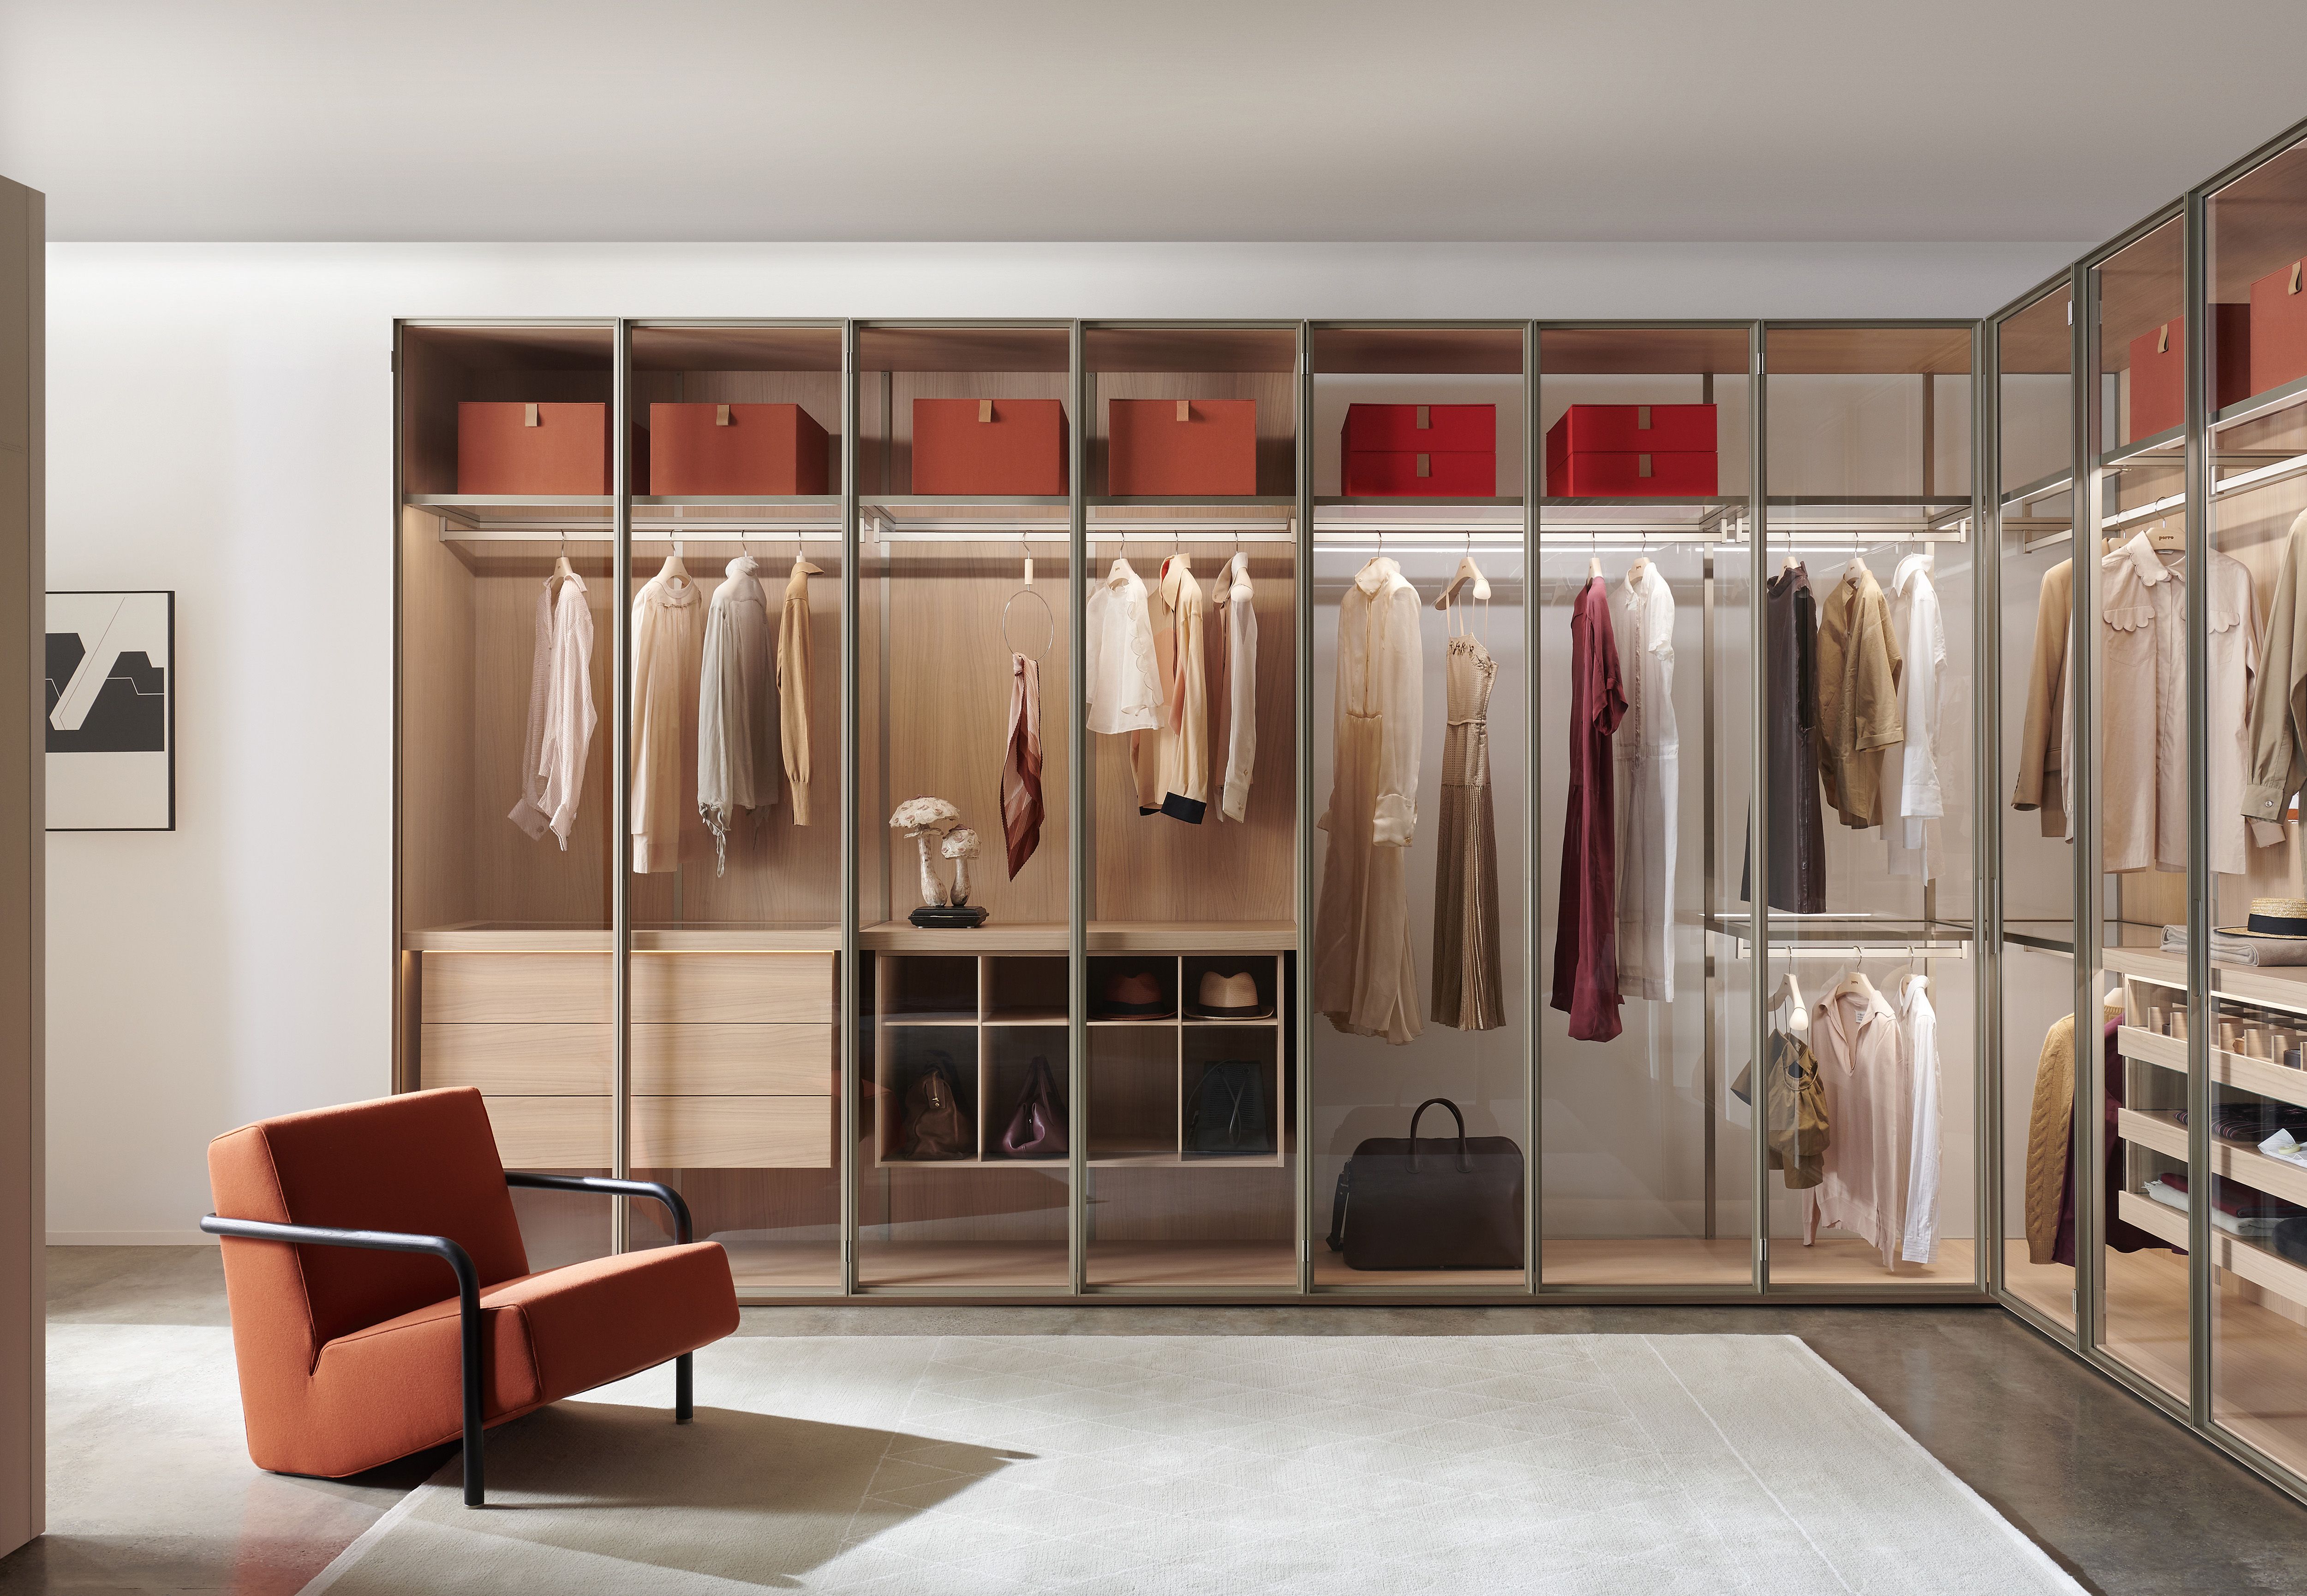 Luxury Closet Design, High End Closet Systems